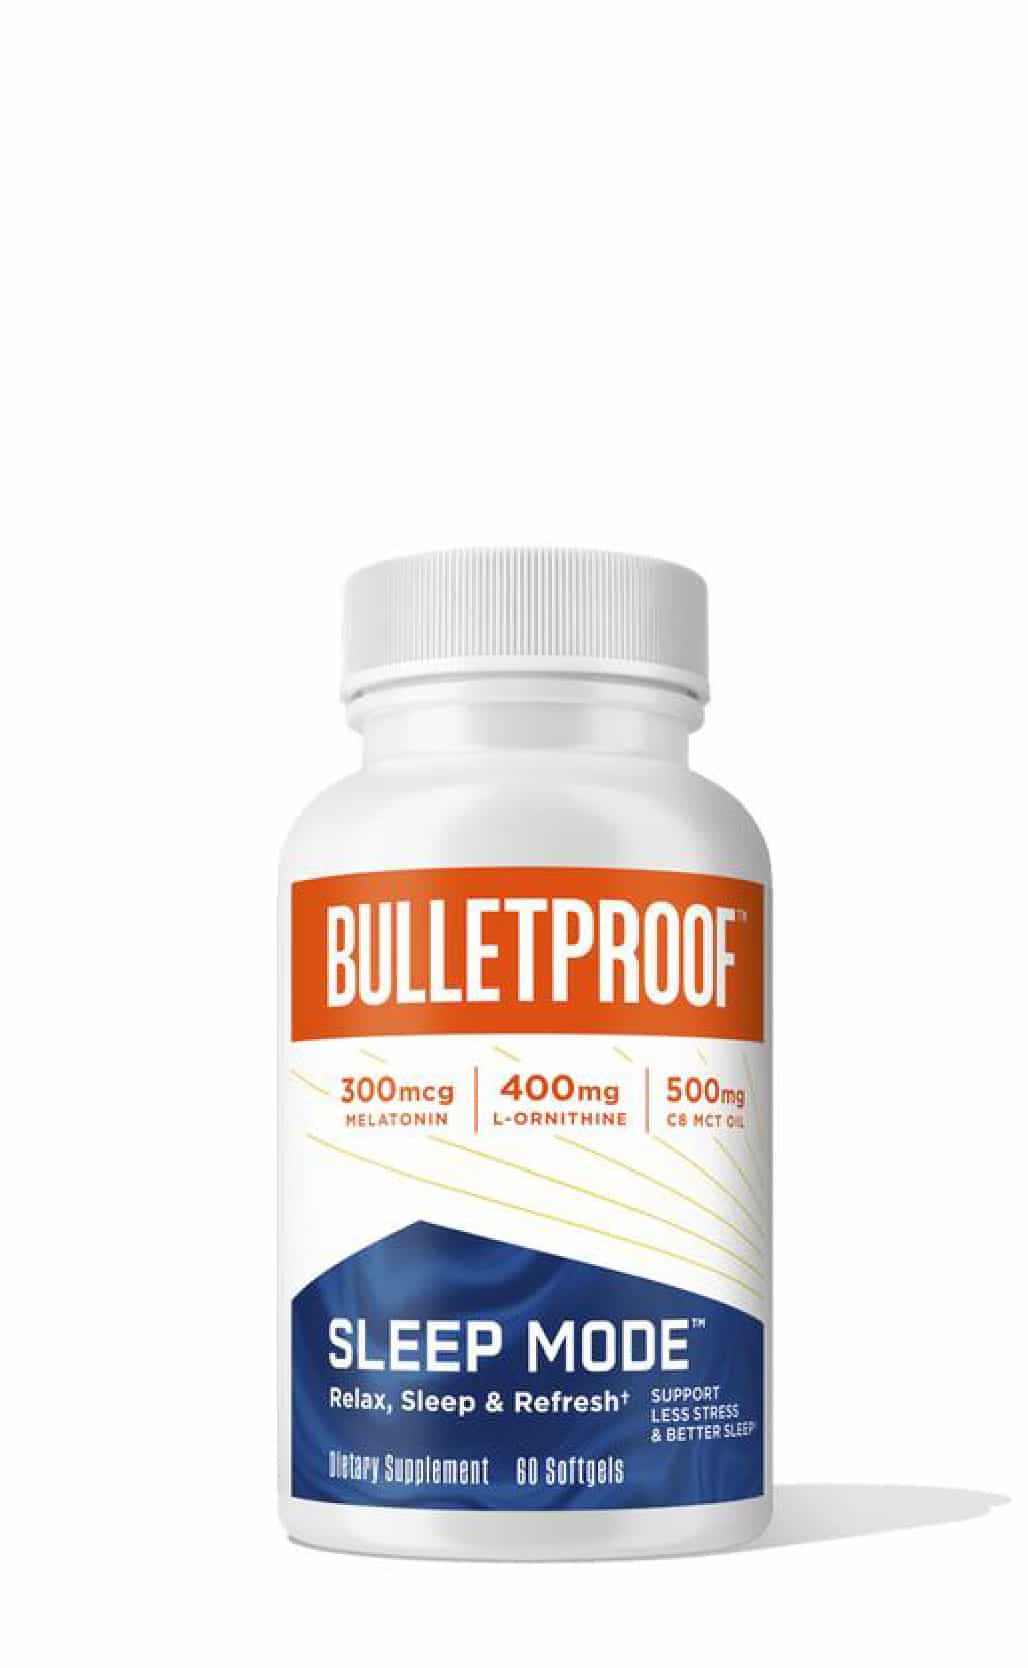 Bulletproof Sleep Mode bei LiveHelfi kaufen